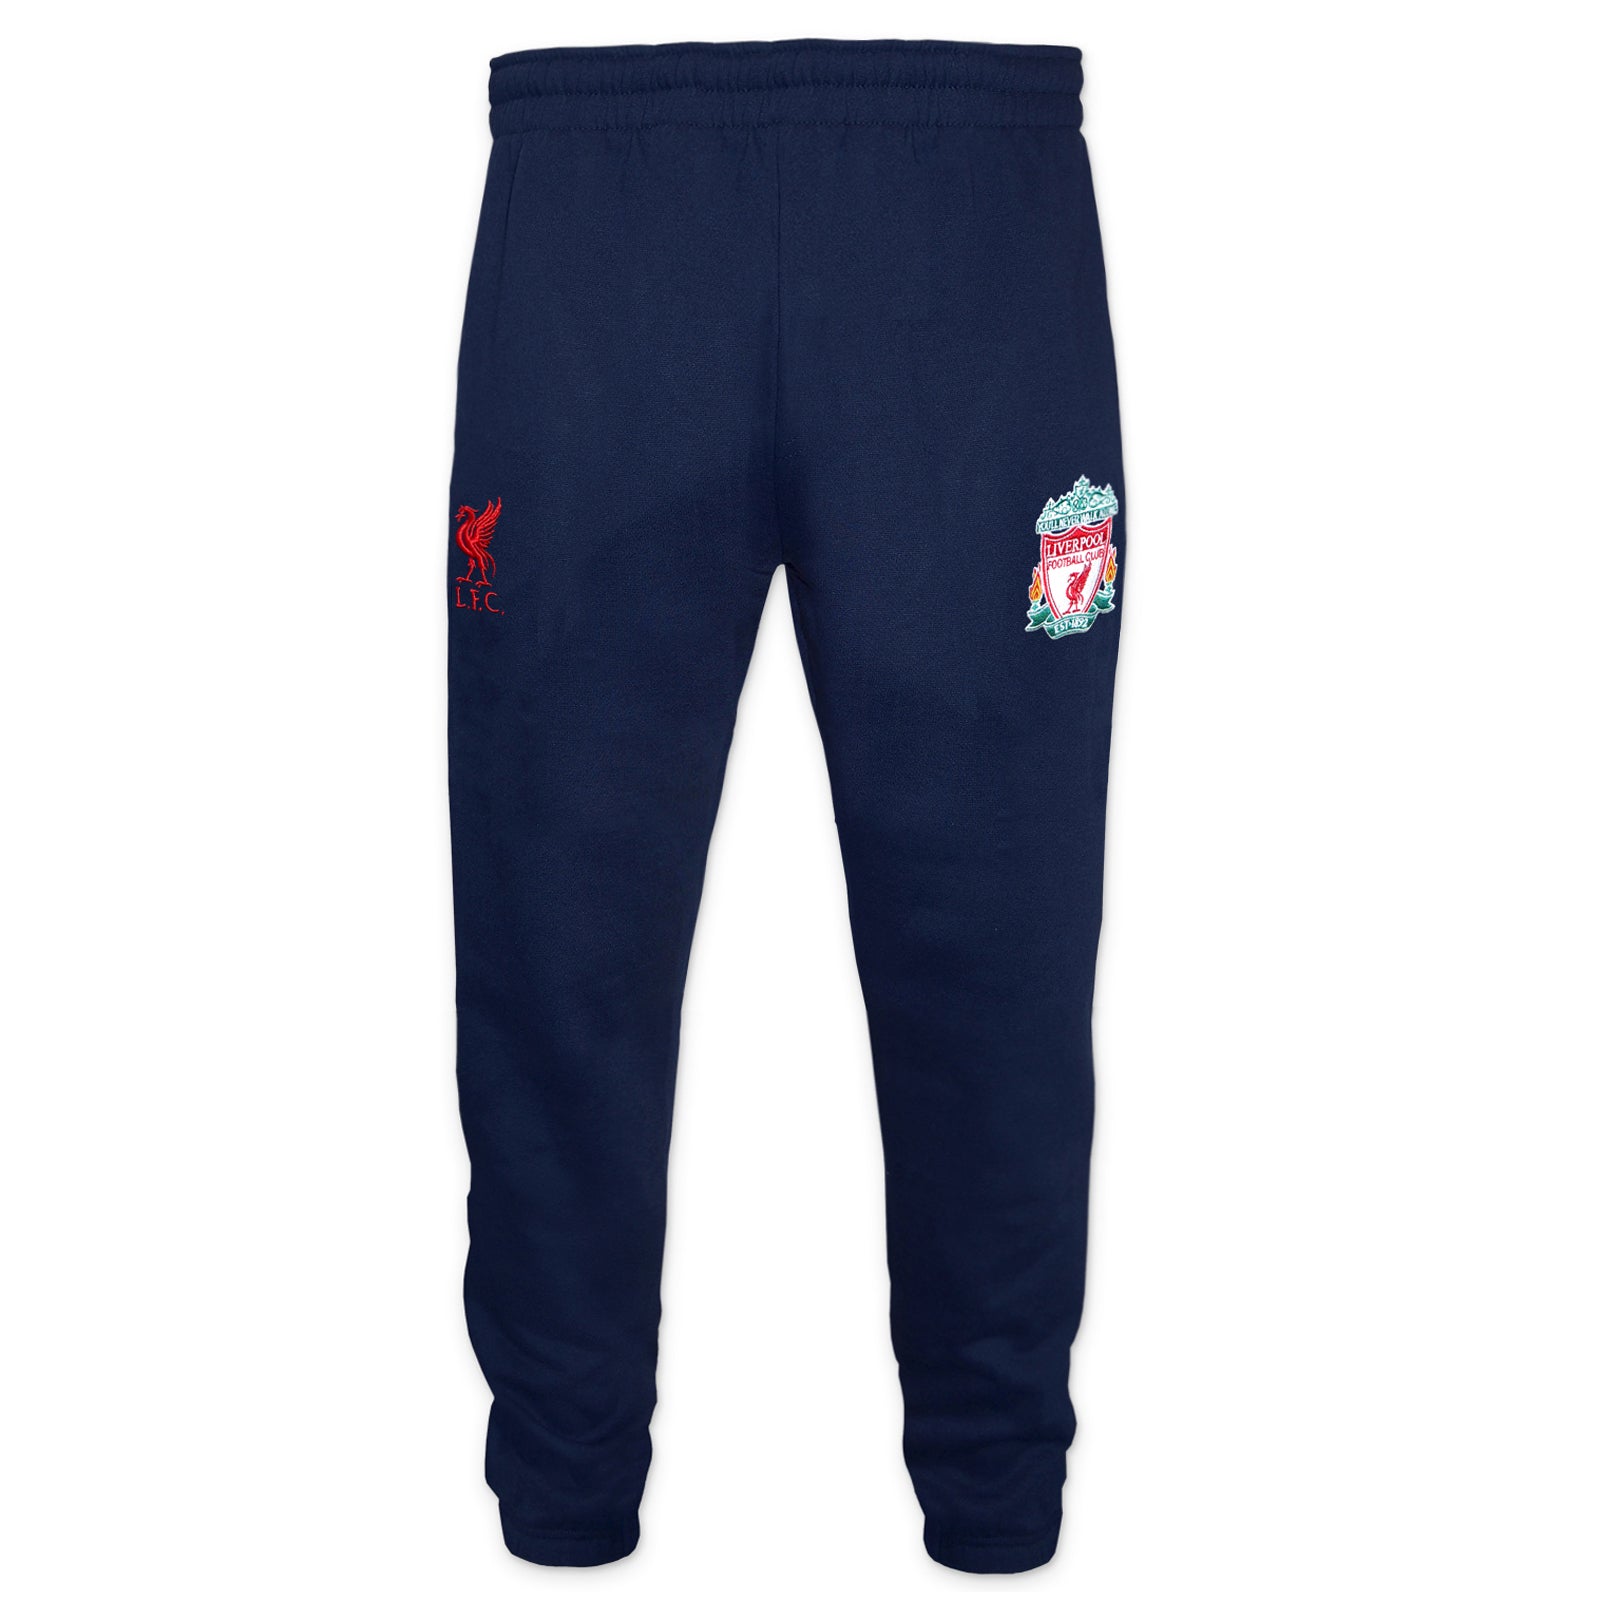 Liverpool FC Boys Jog Pants